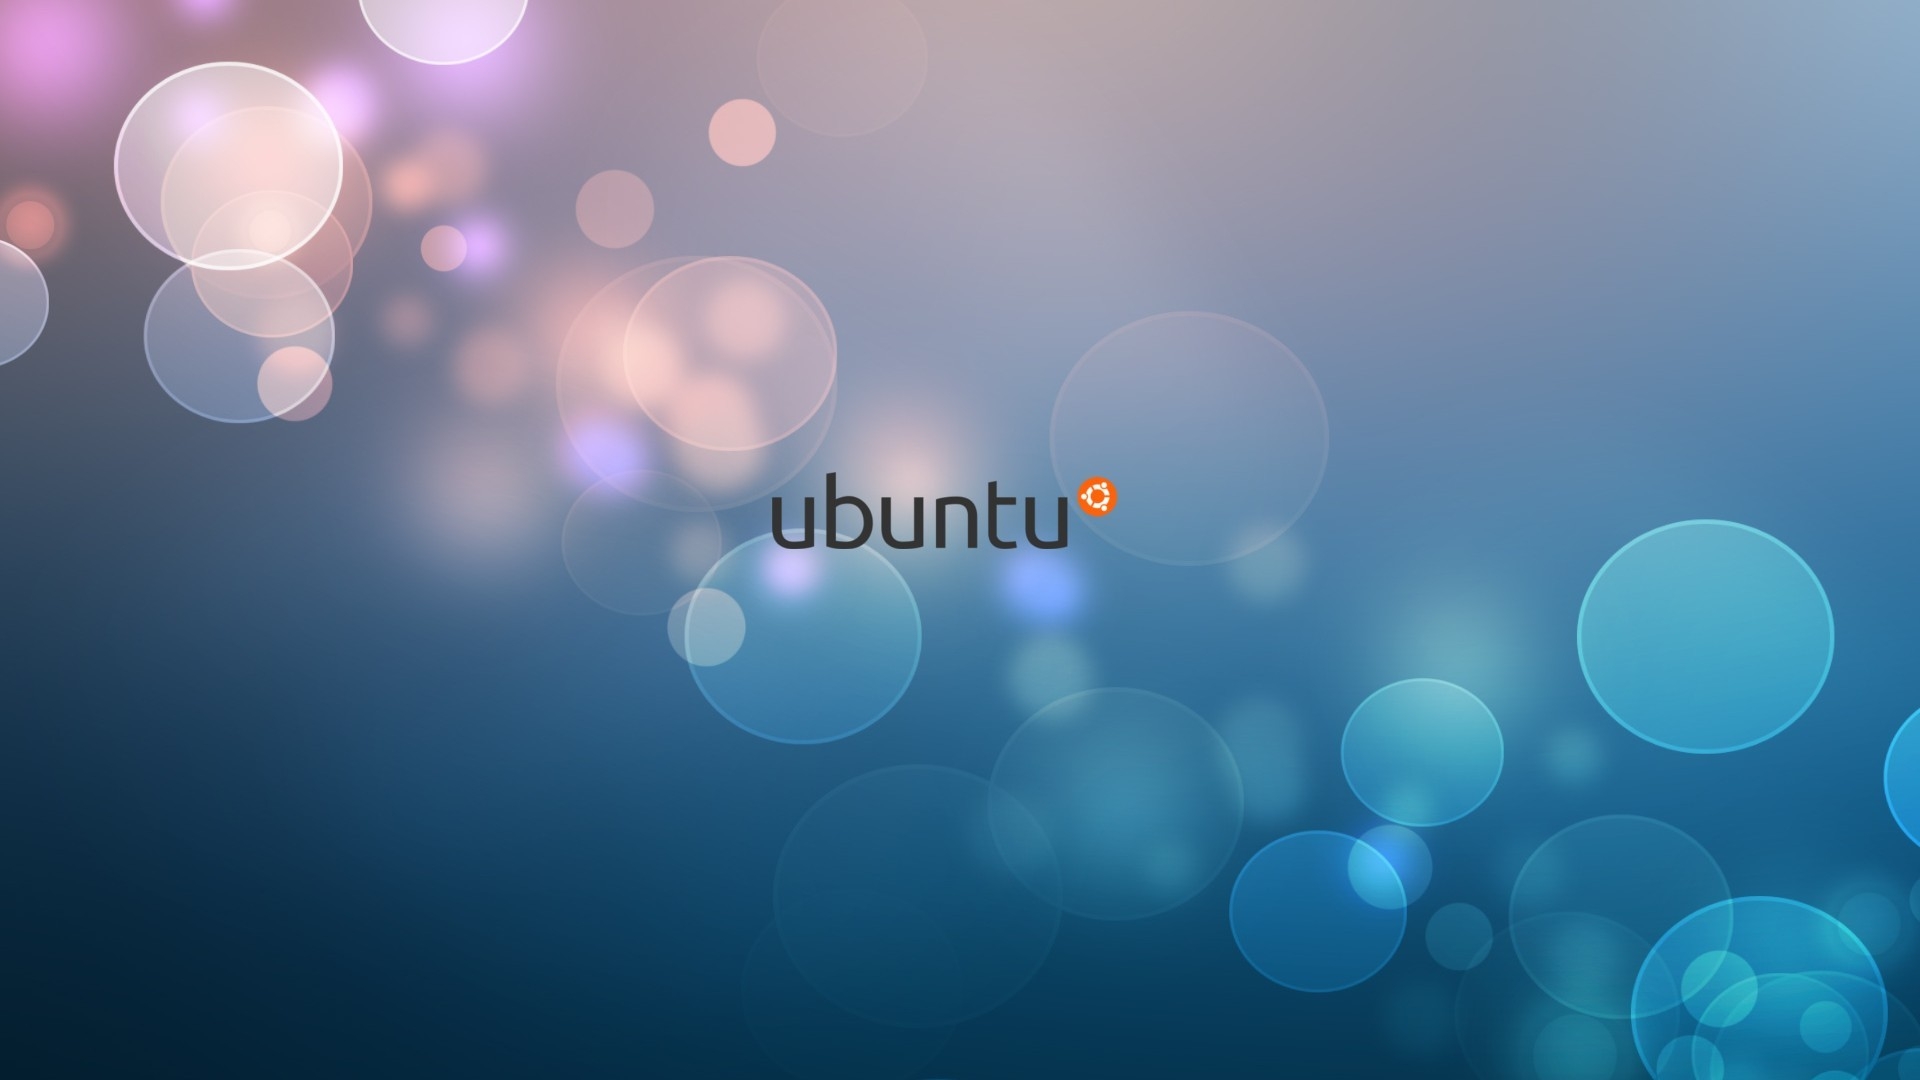 ubuntu desktop background